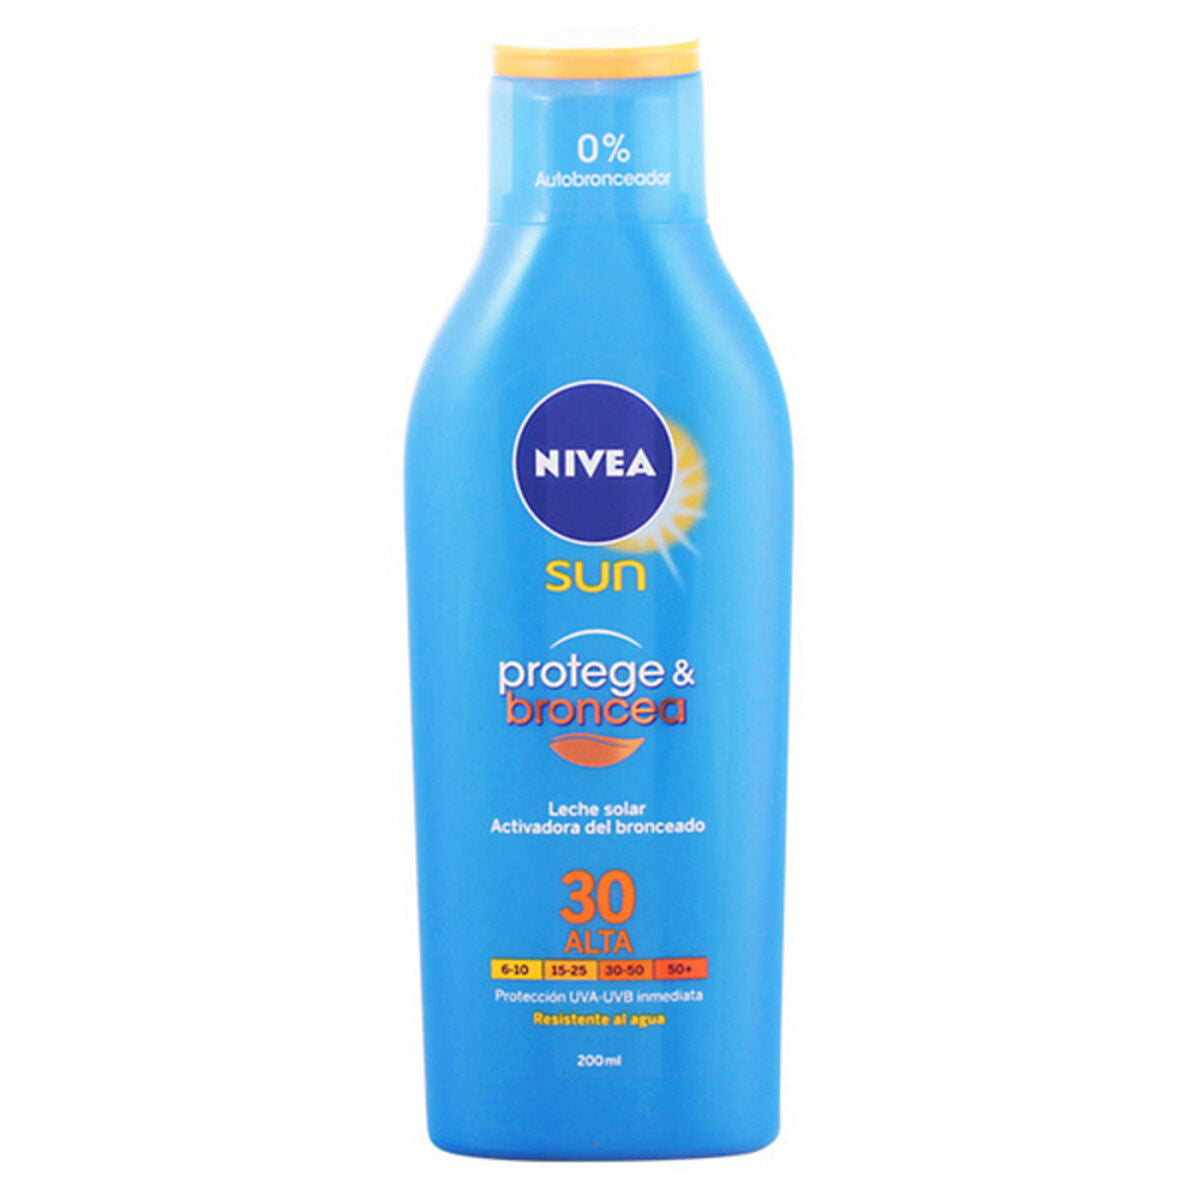 Sun Milk Protege & Broncea Nivea SPF 30 (200 ml) 30 (200 ml)-0